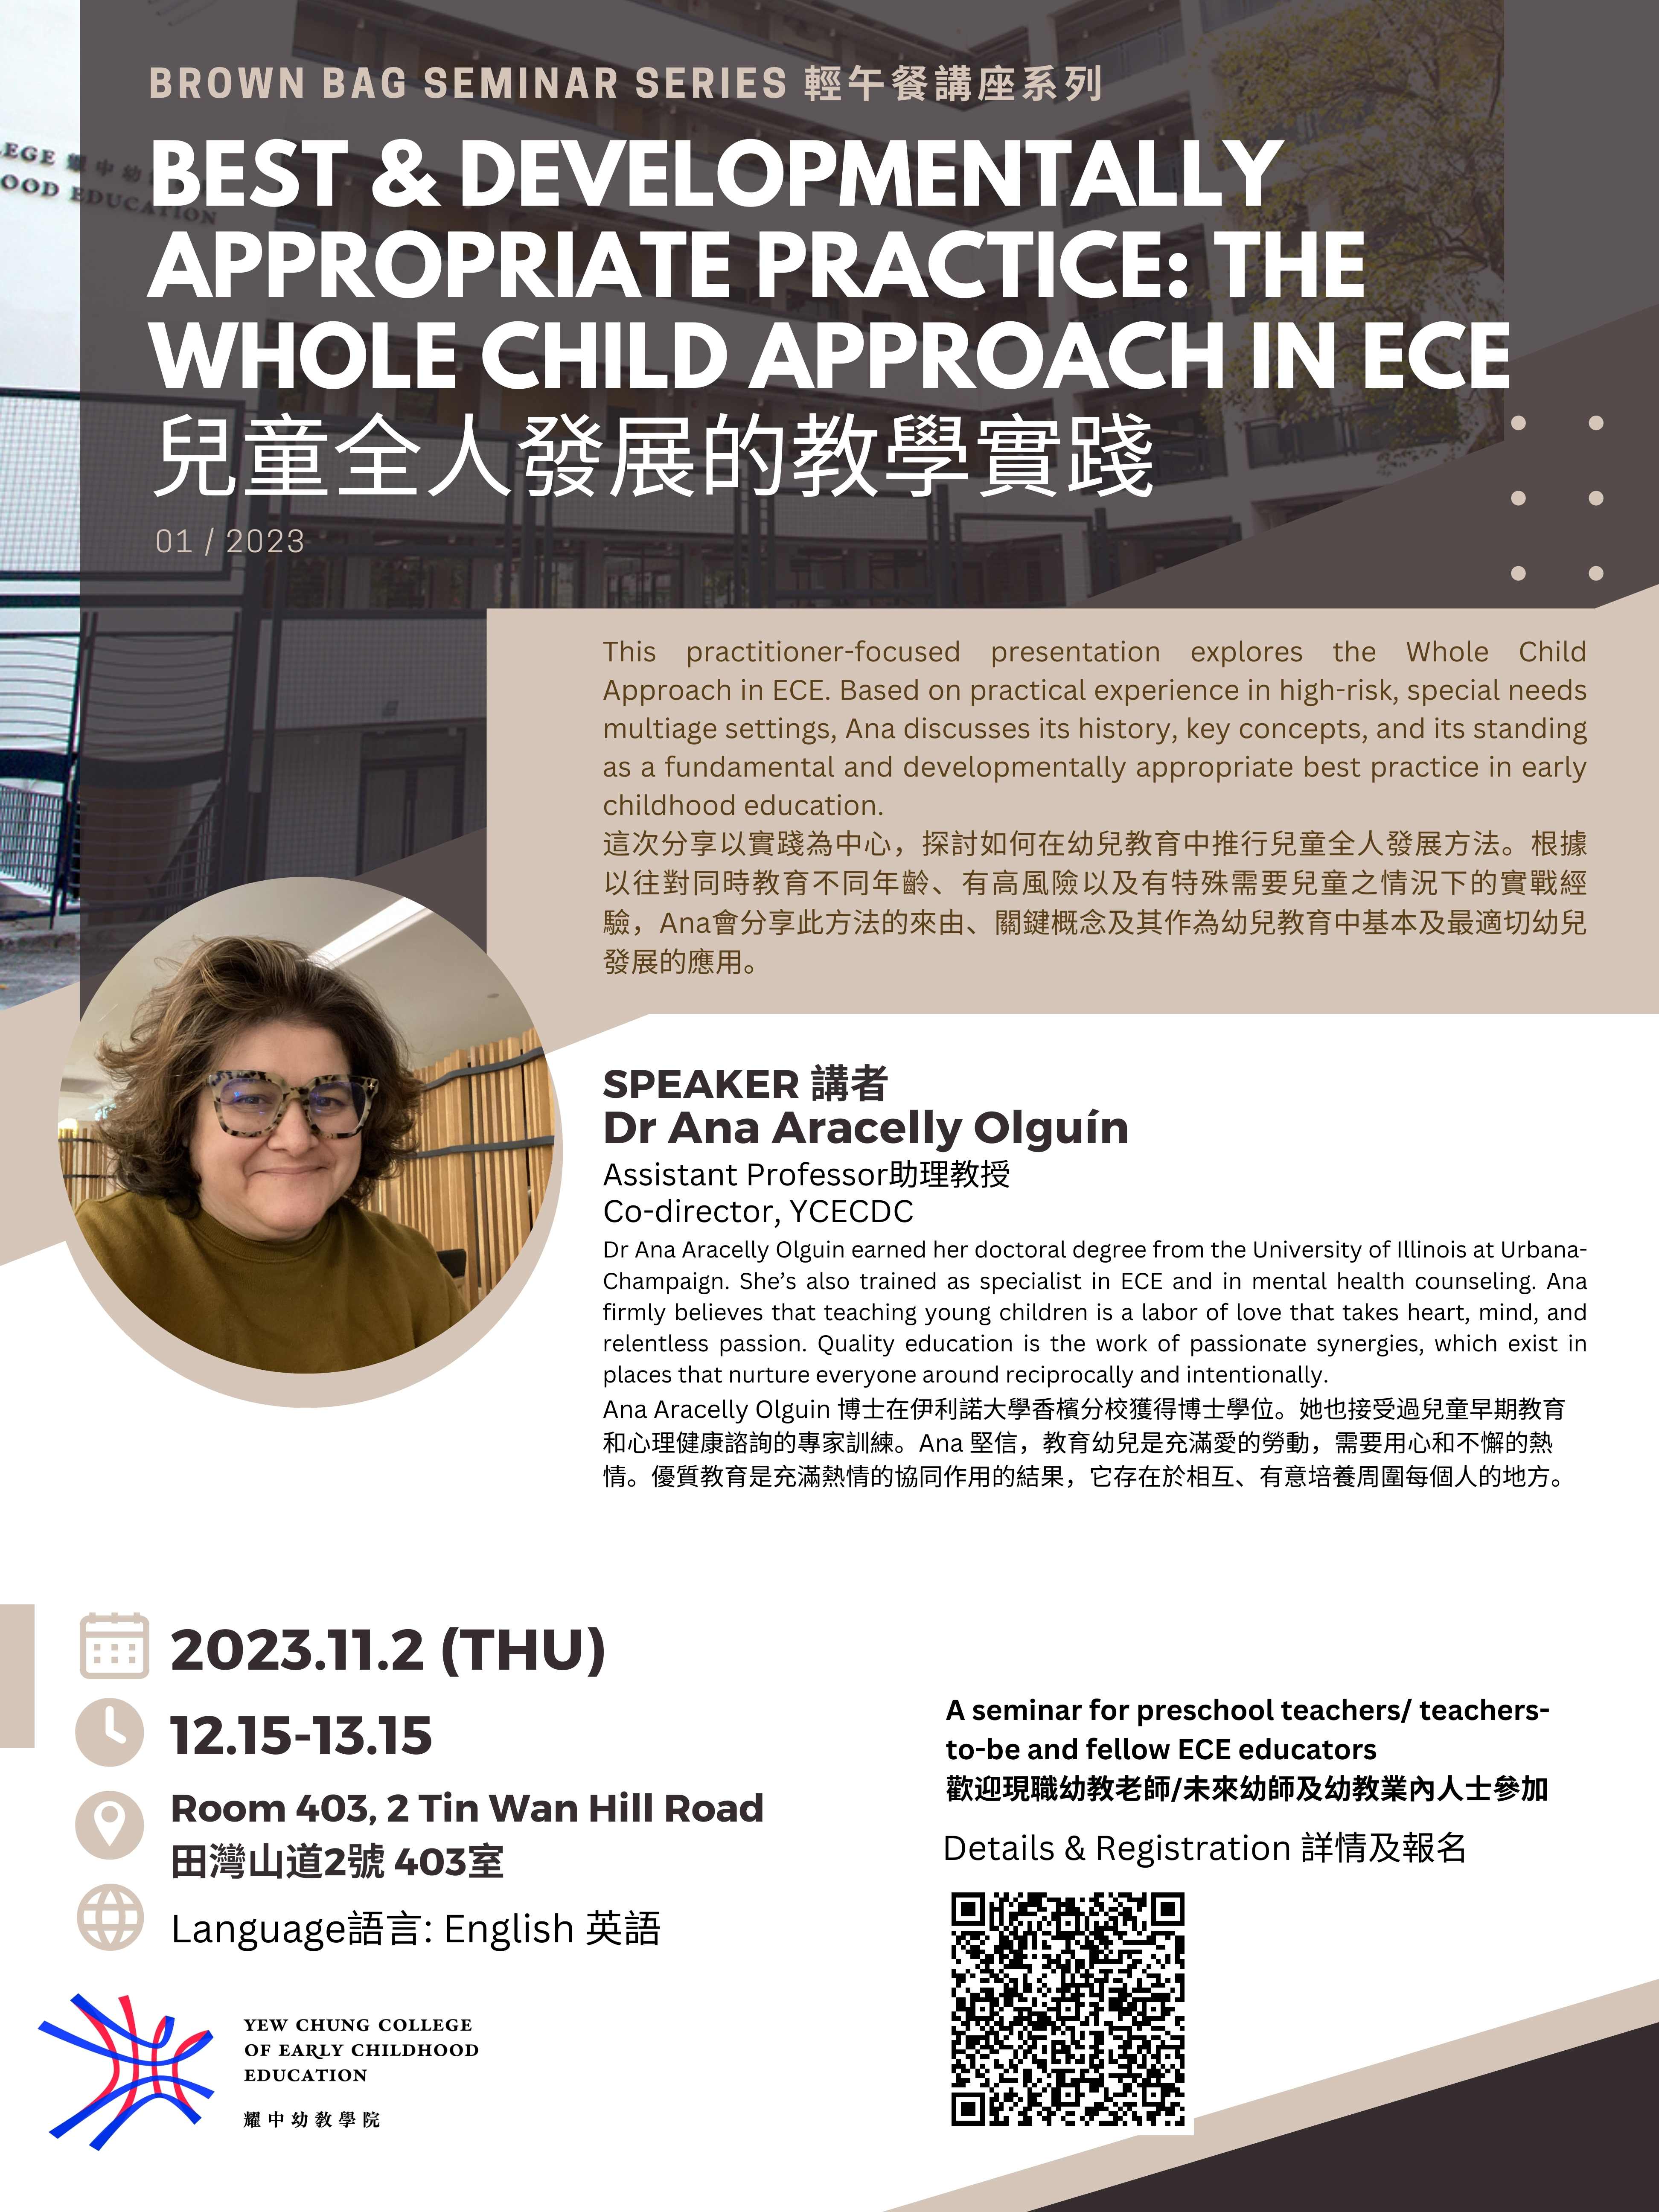 Best & developmentally appropriate practice: The Whole Child Approach in ECE